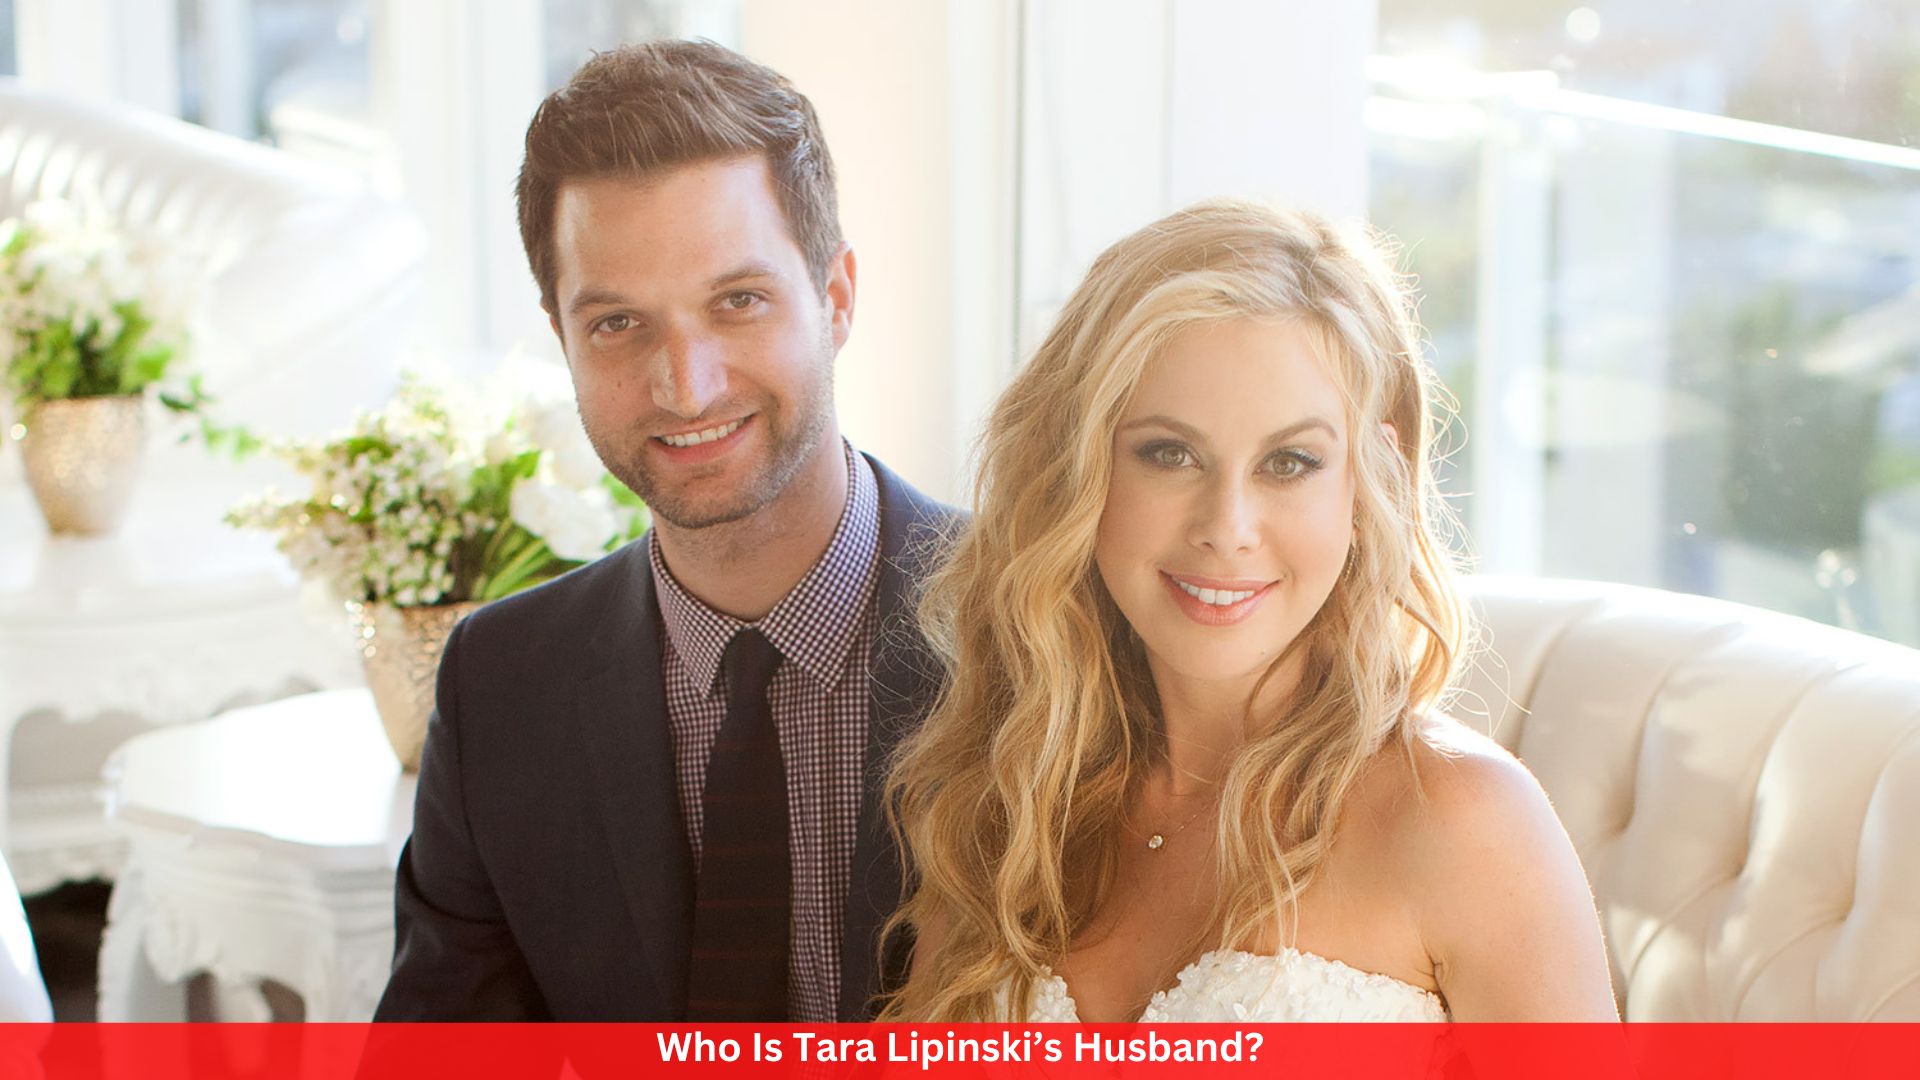 Who Is Tara Lipinski’s Husband?